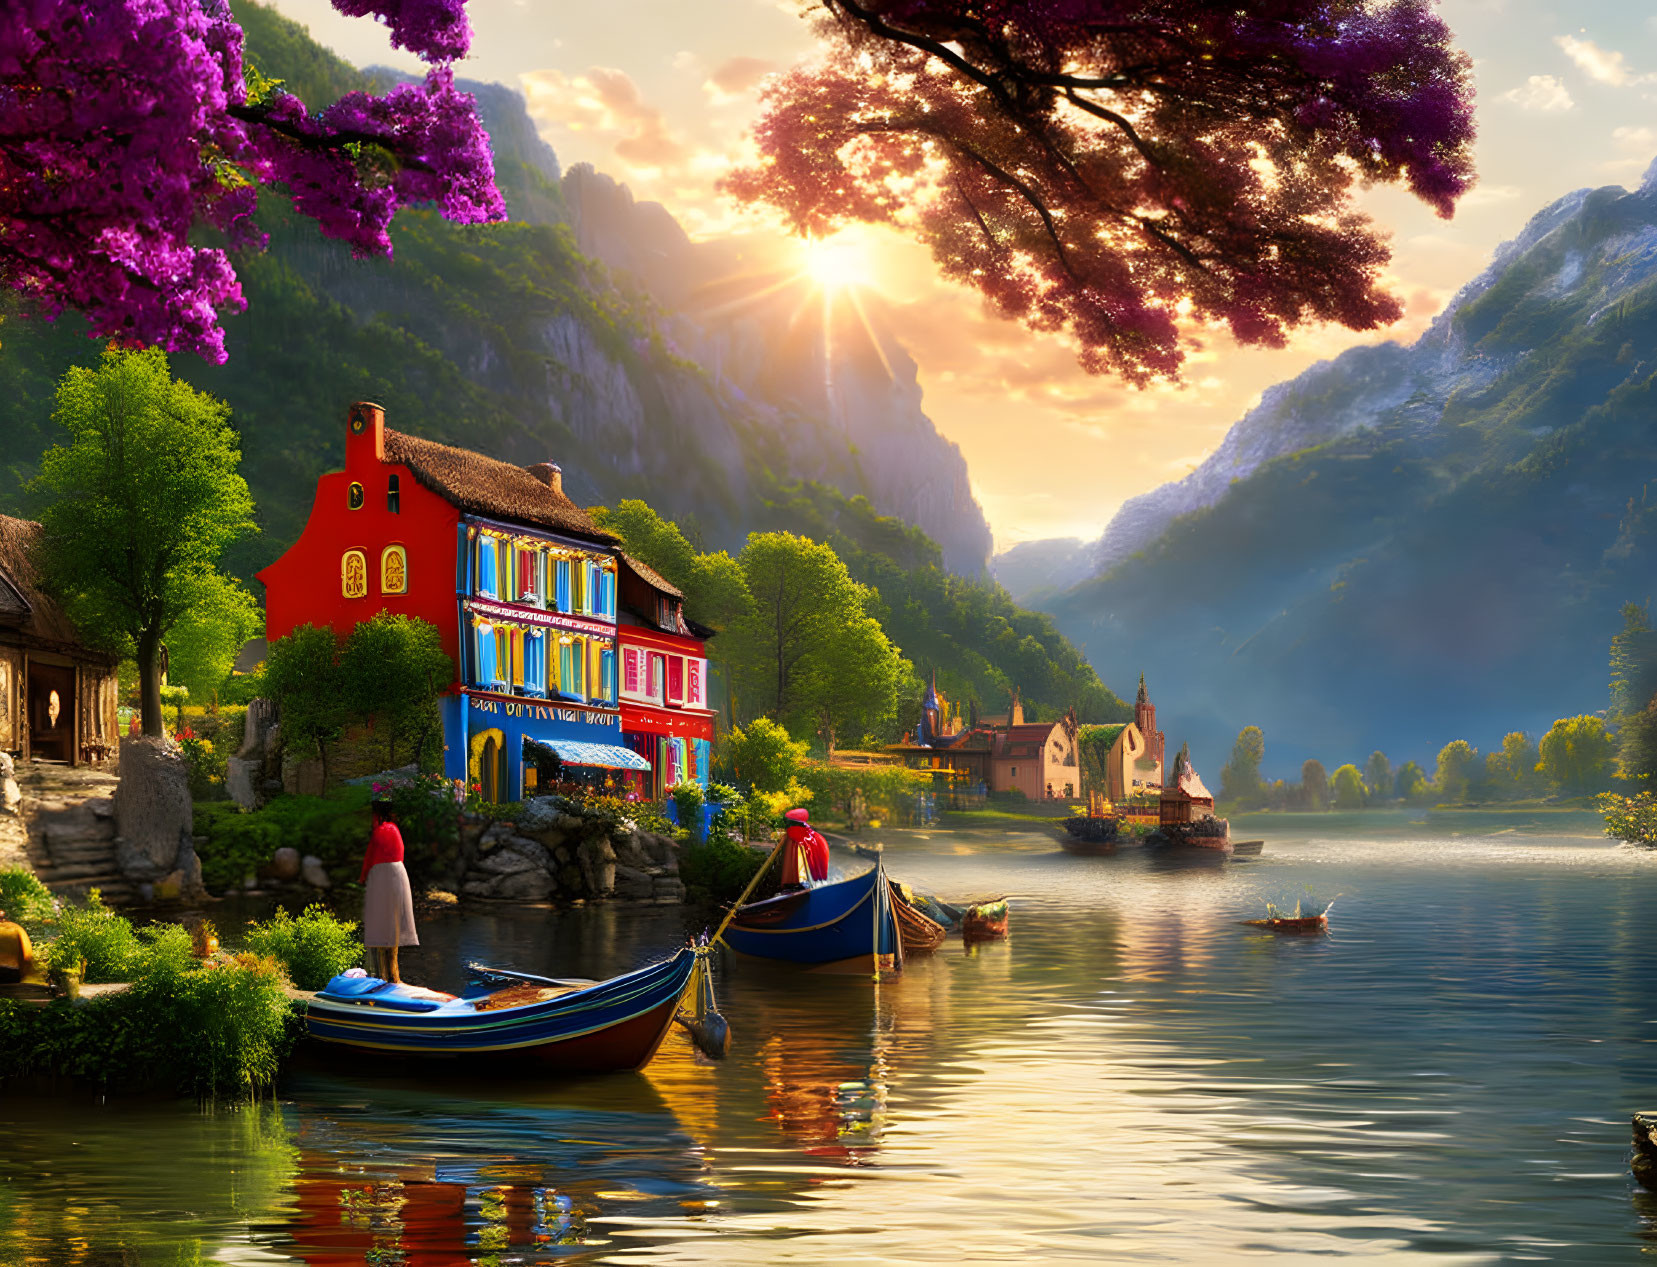 Picturesque riverside village 